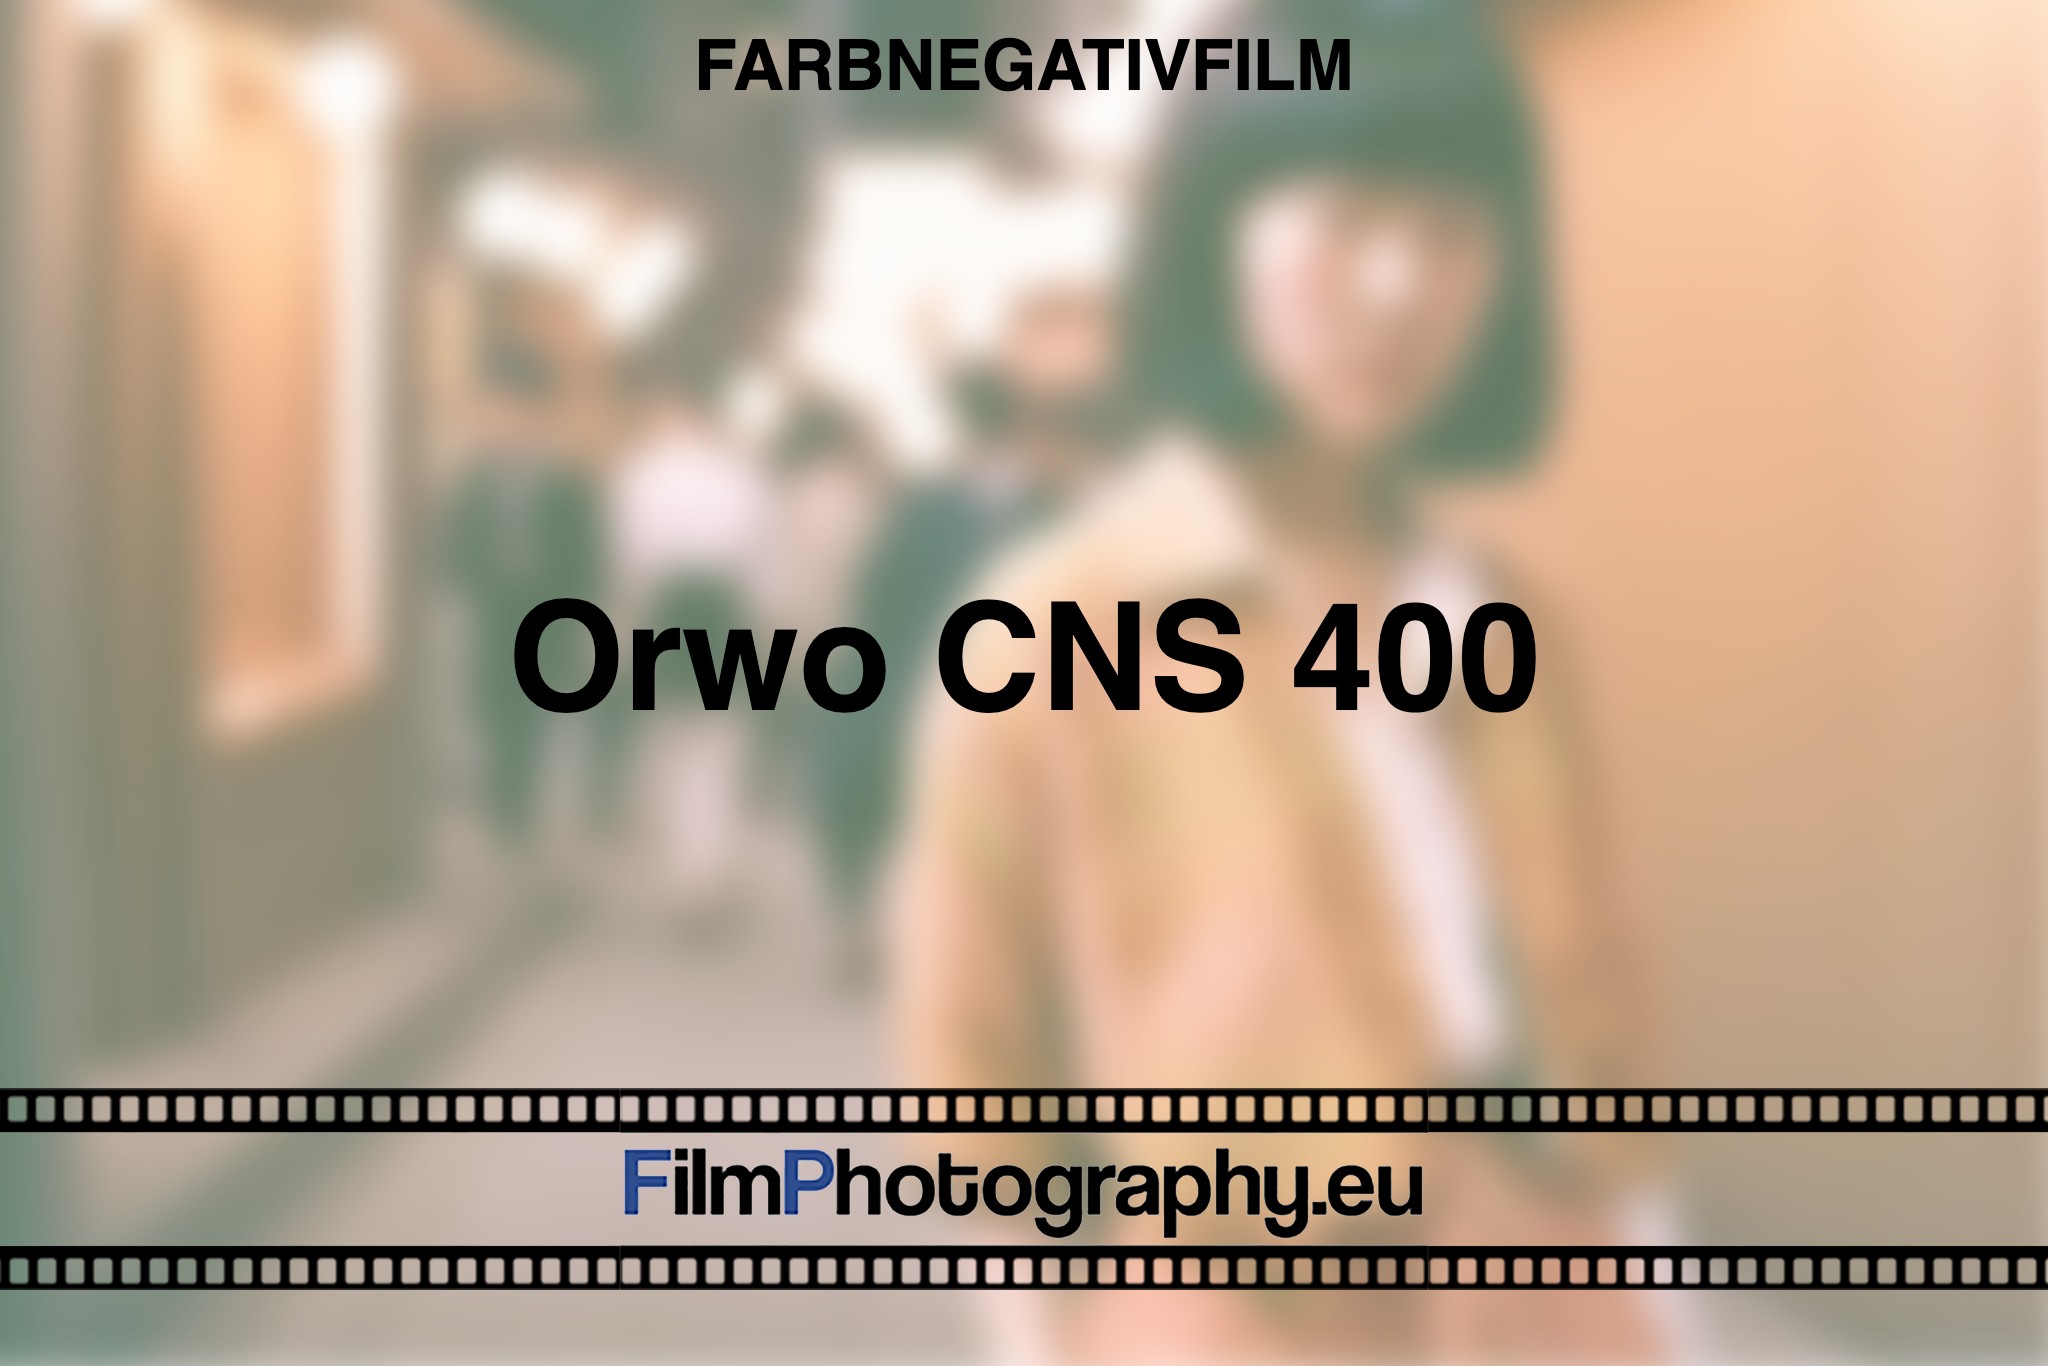 orwo-cns-400-farbnegativfilm-bnv